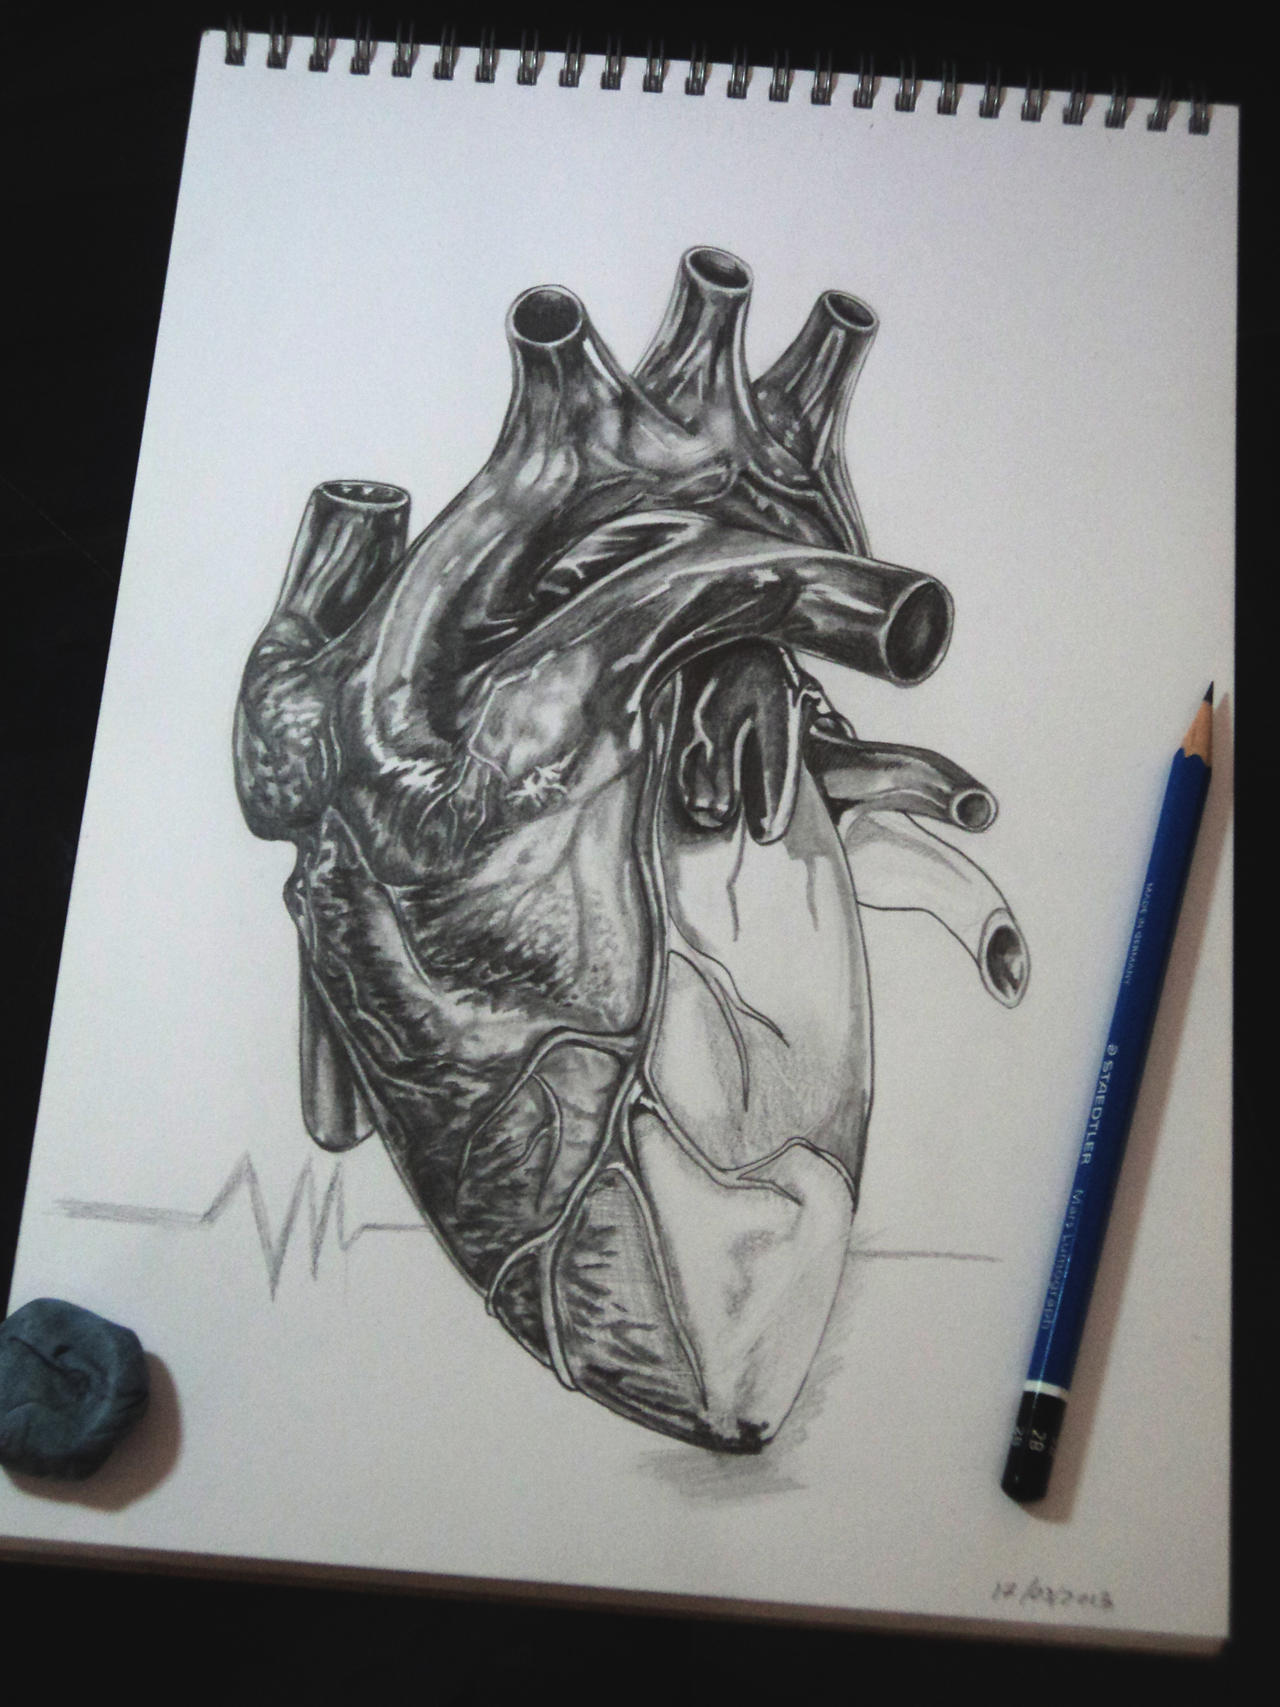 Human heart by tubyx on DeviantArt